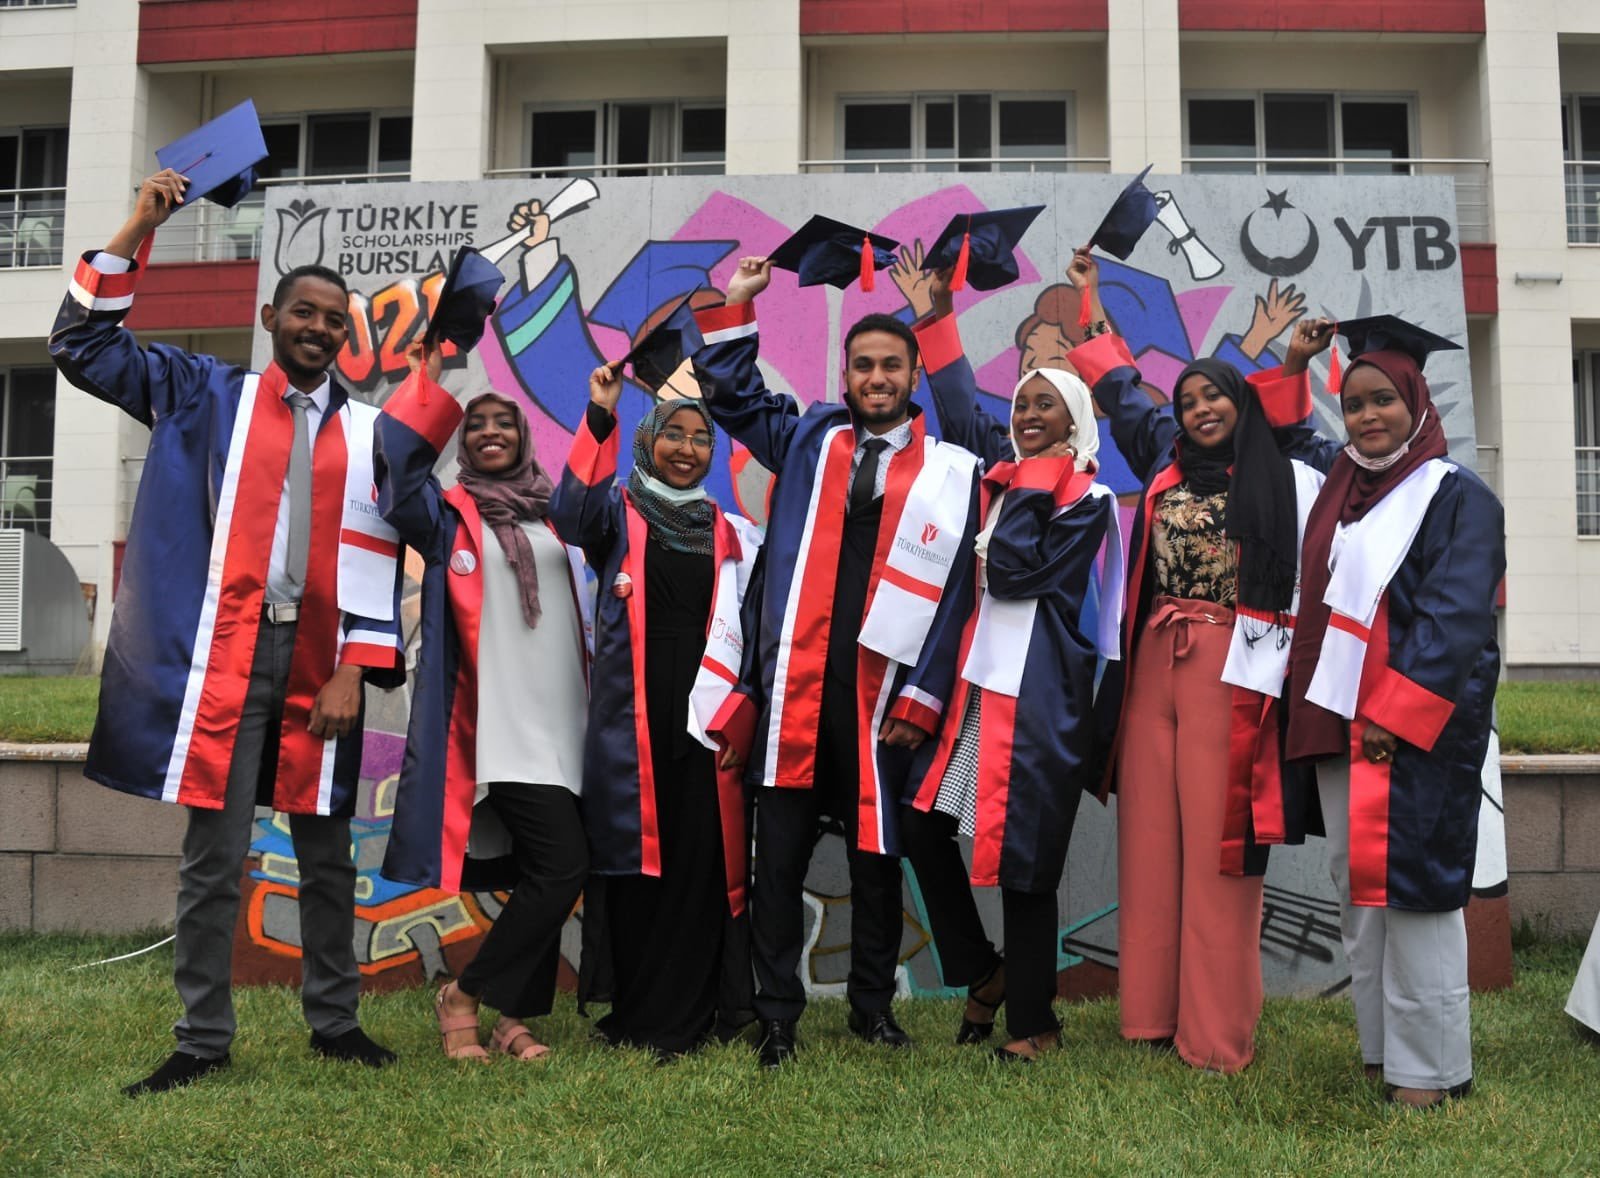 Türkiye Scholarships students celebrate graduation on the sidelines of a ceremony in the capital Ankara, Turkey, July 8, 2021. (COURTESY OF YTB)